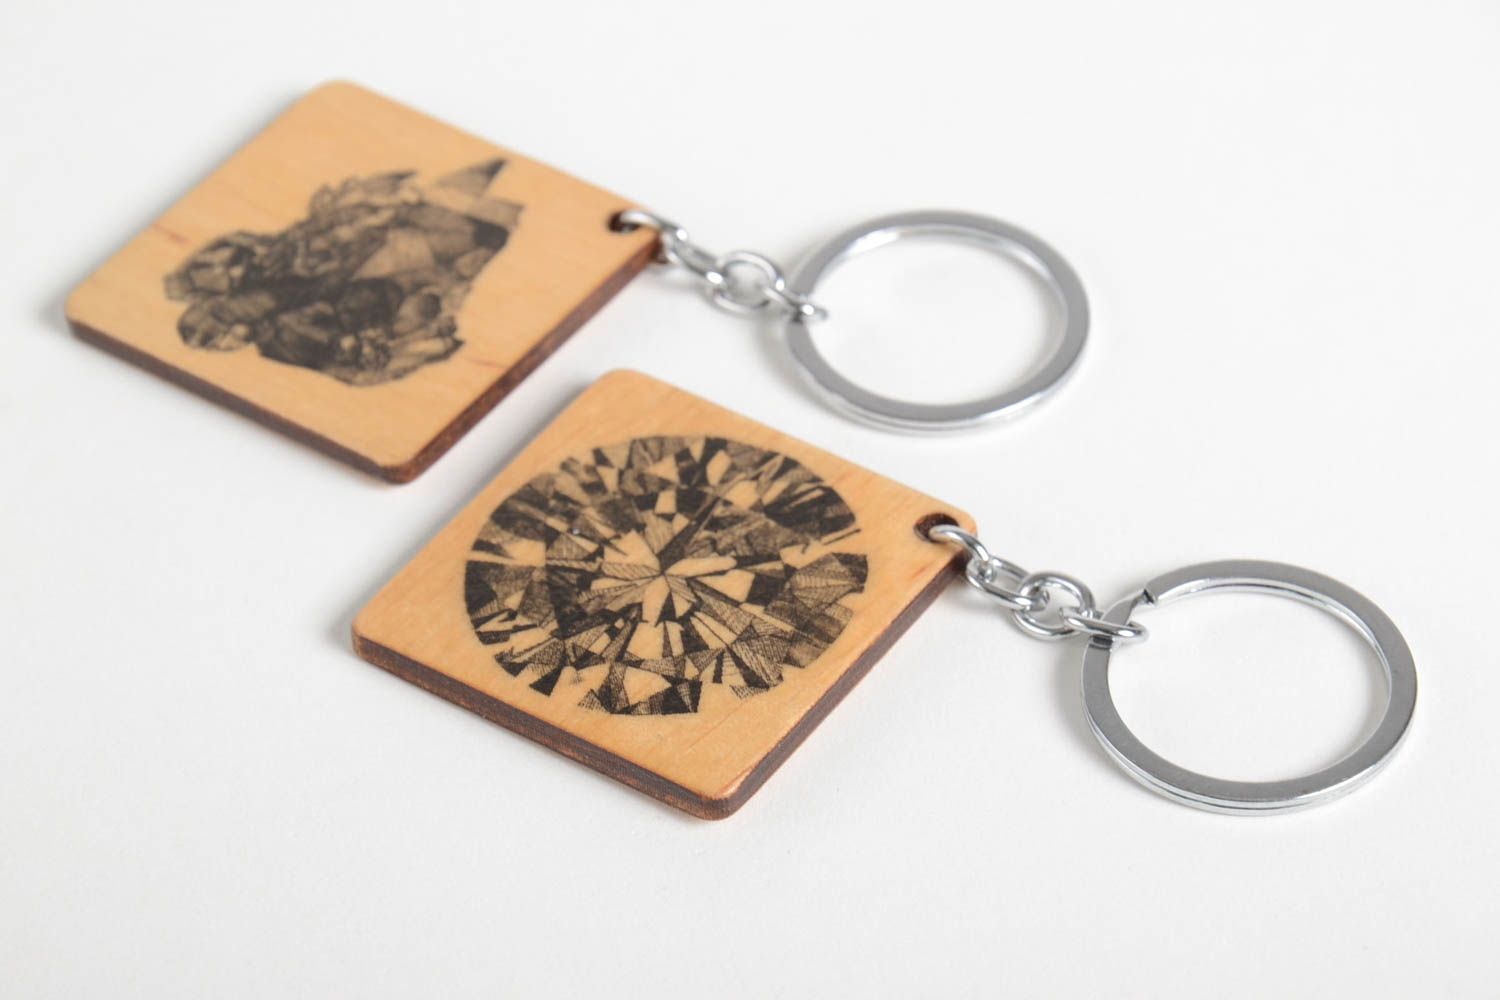 Handmade keychain designer keychains wooden souvenirs gift for him 2 items photo 3